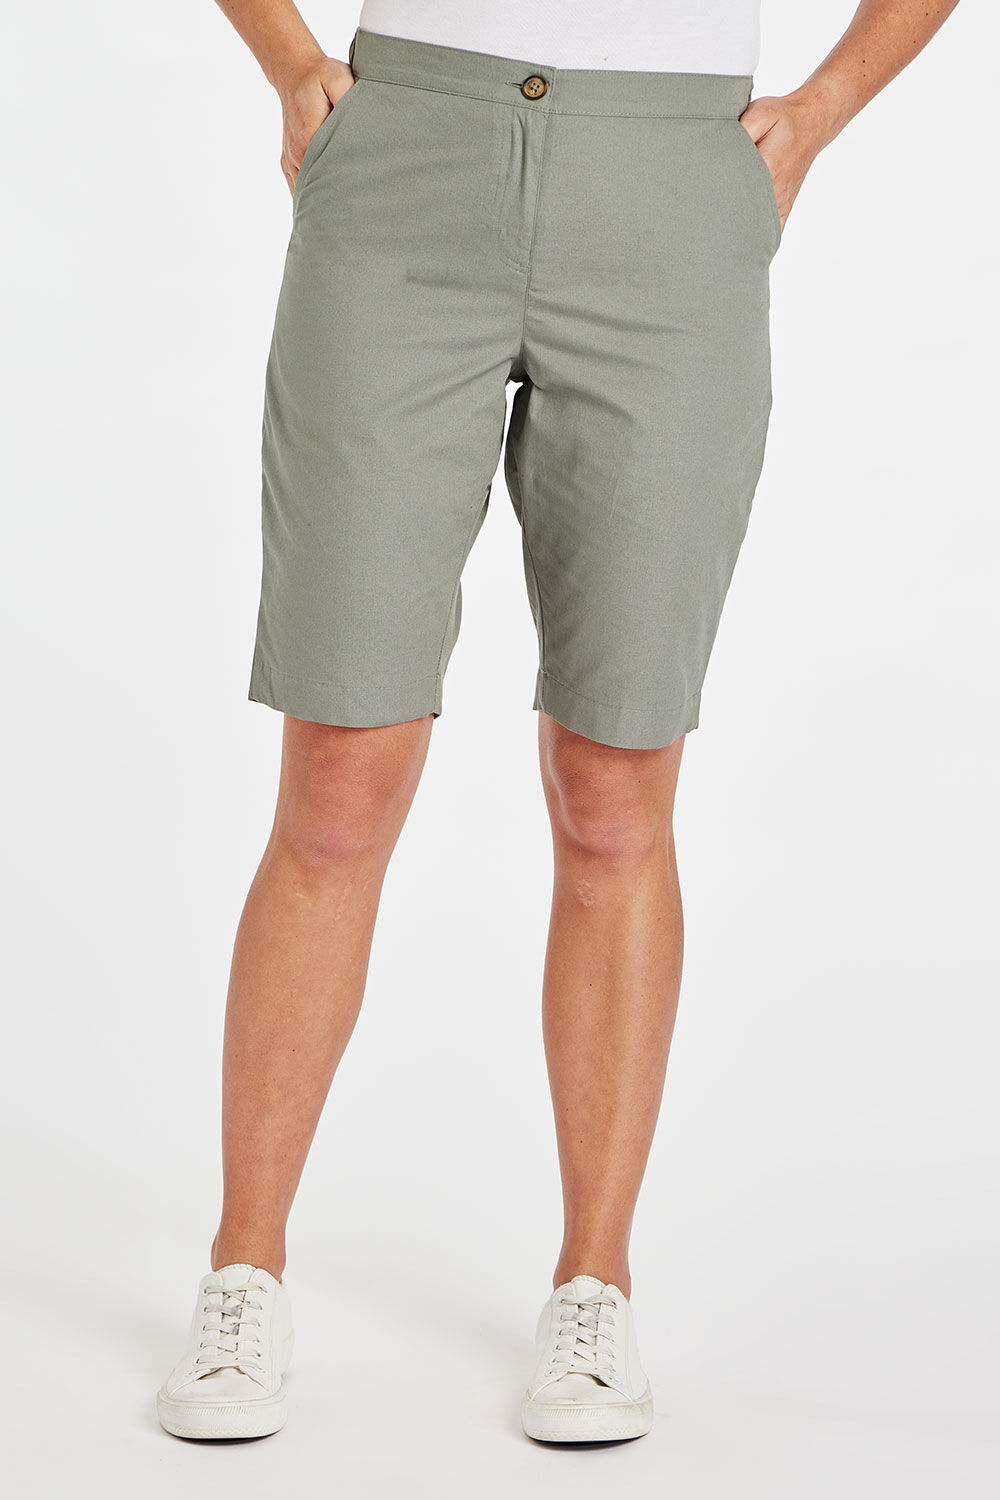 Bonmarche Khaki Elasticated Shorts With Pockets, Size: 28